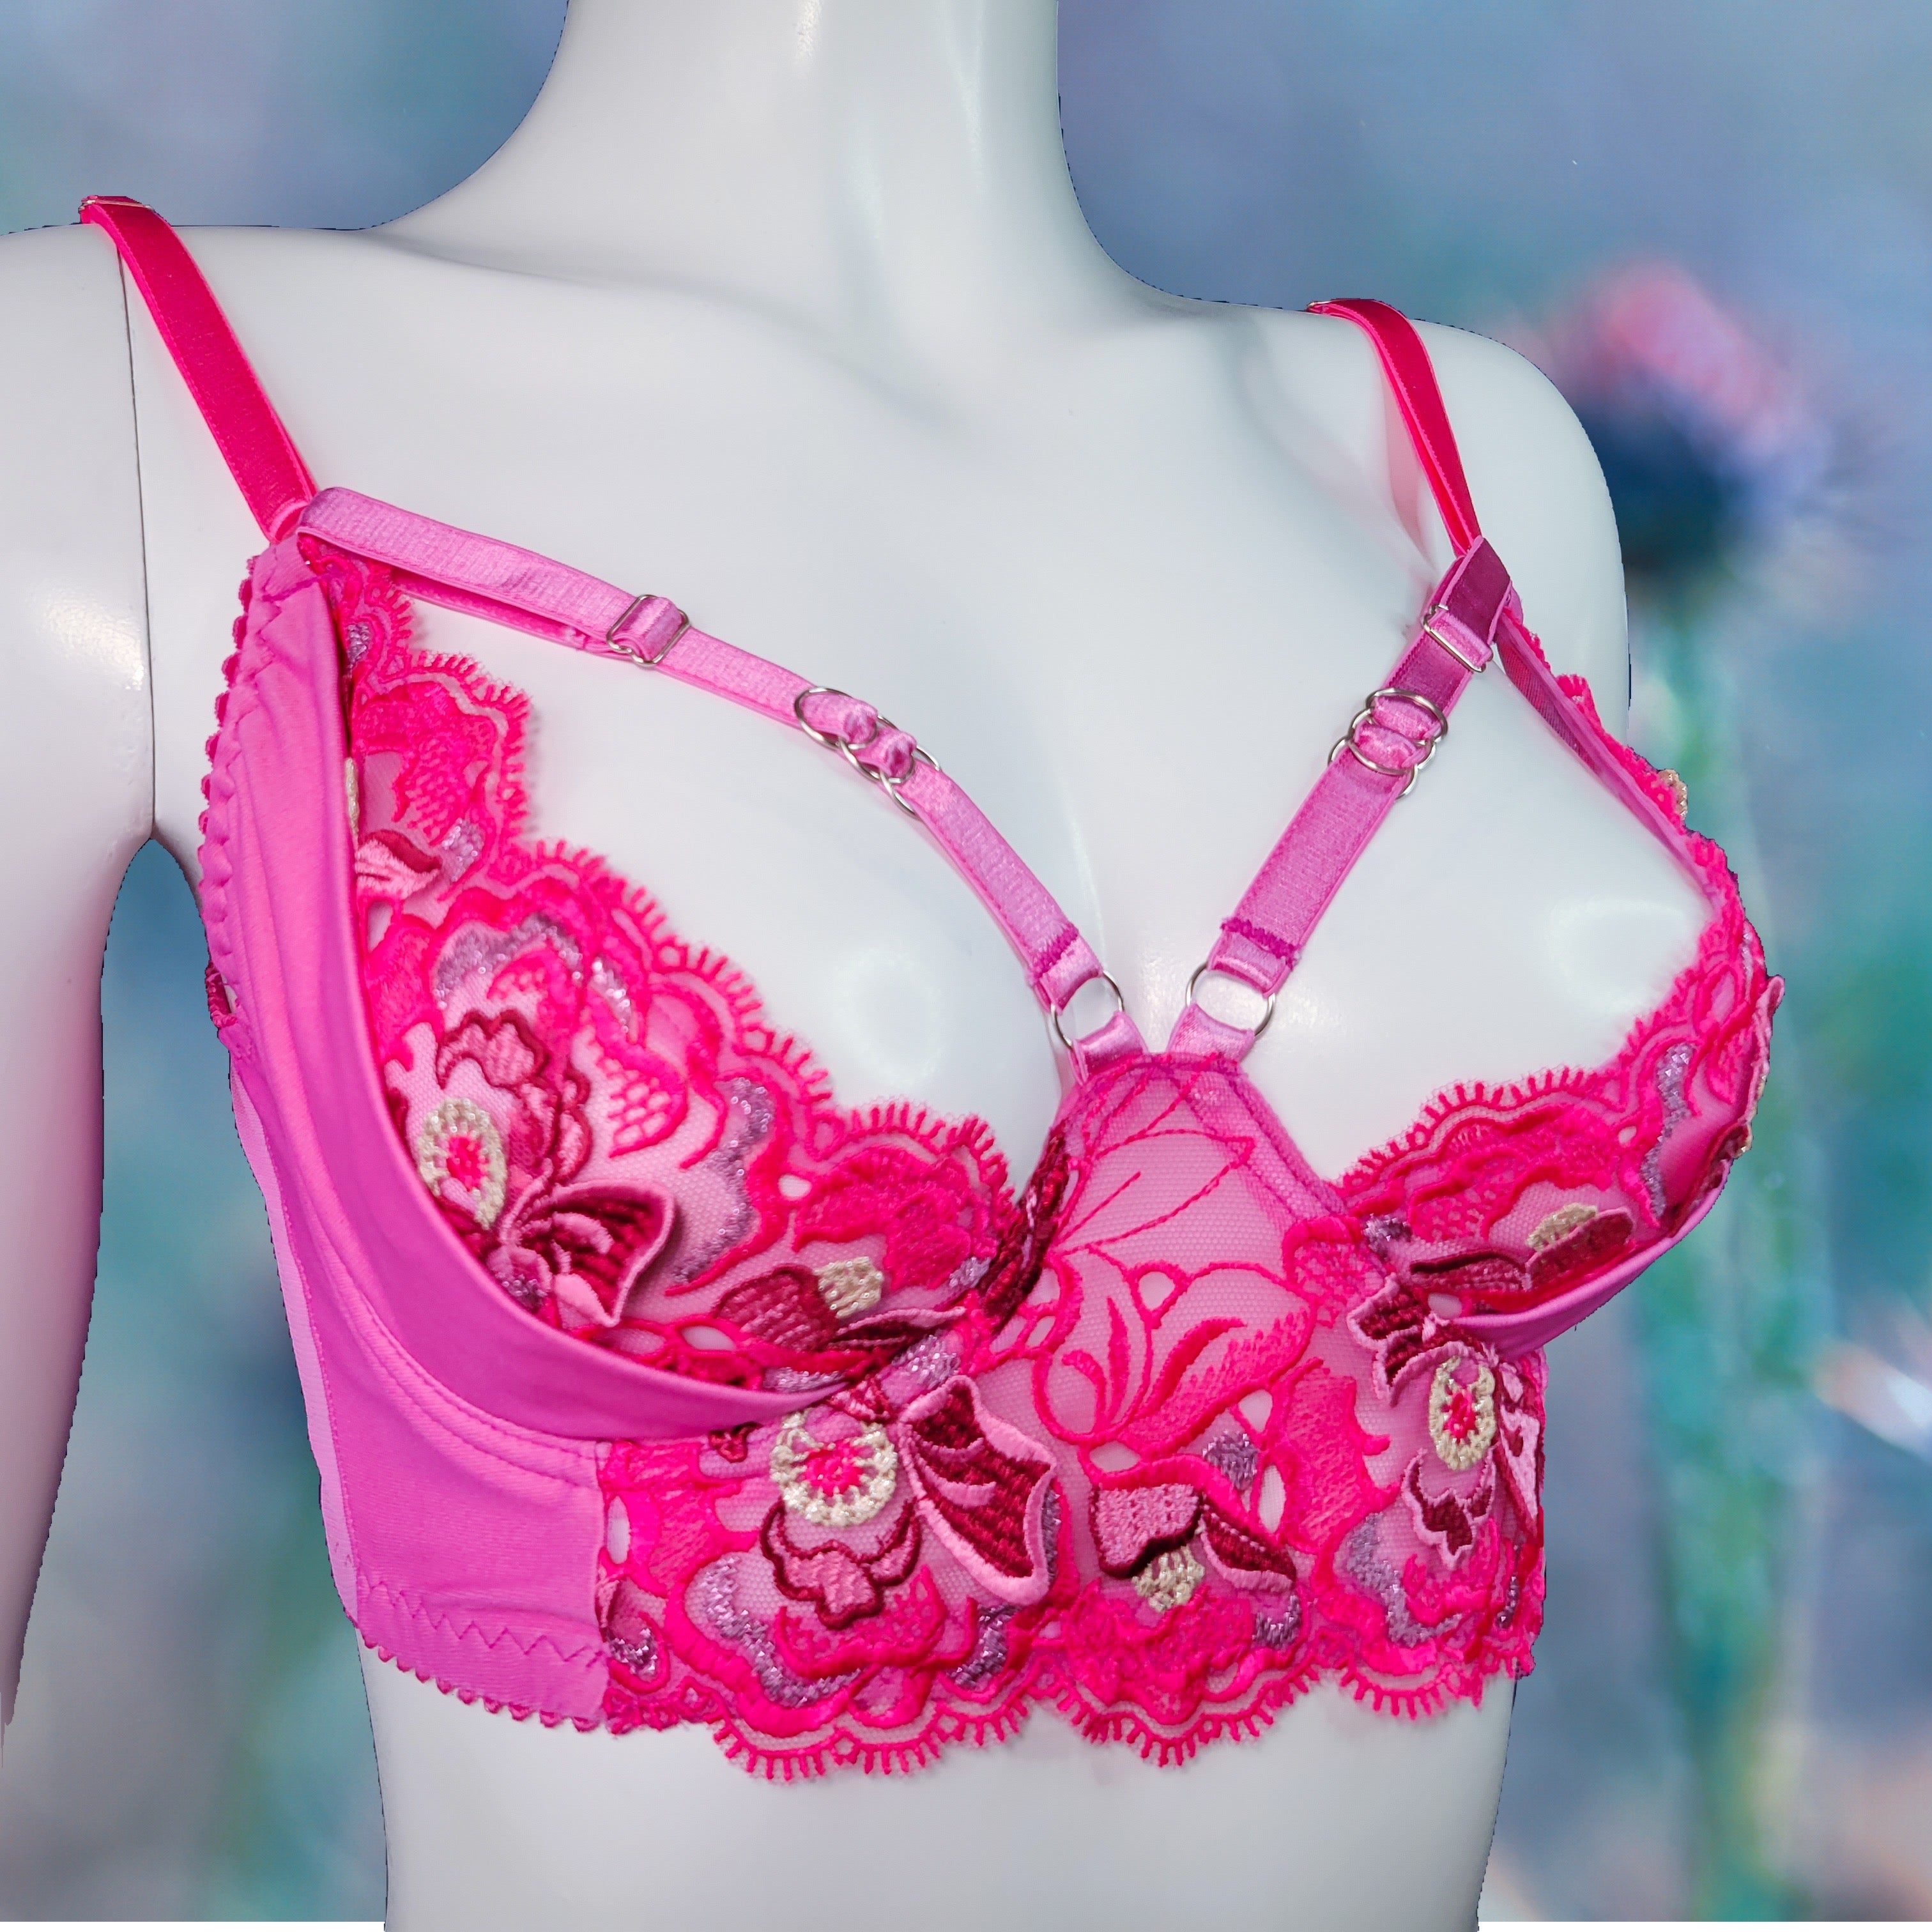 Vanity Fair Women's Bras, Wireless - Amethyst Pink 